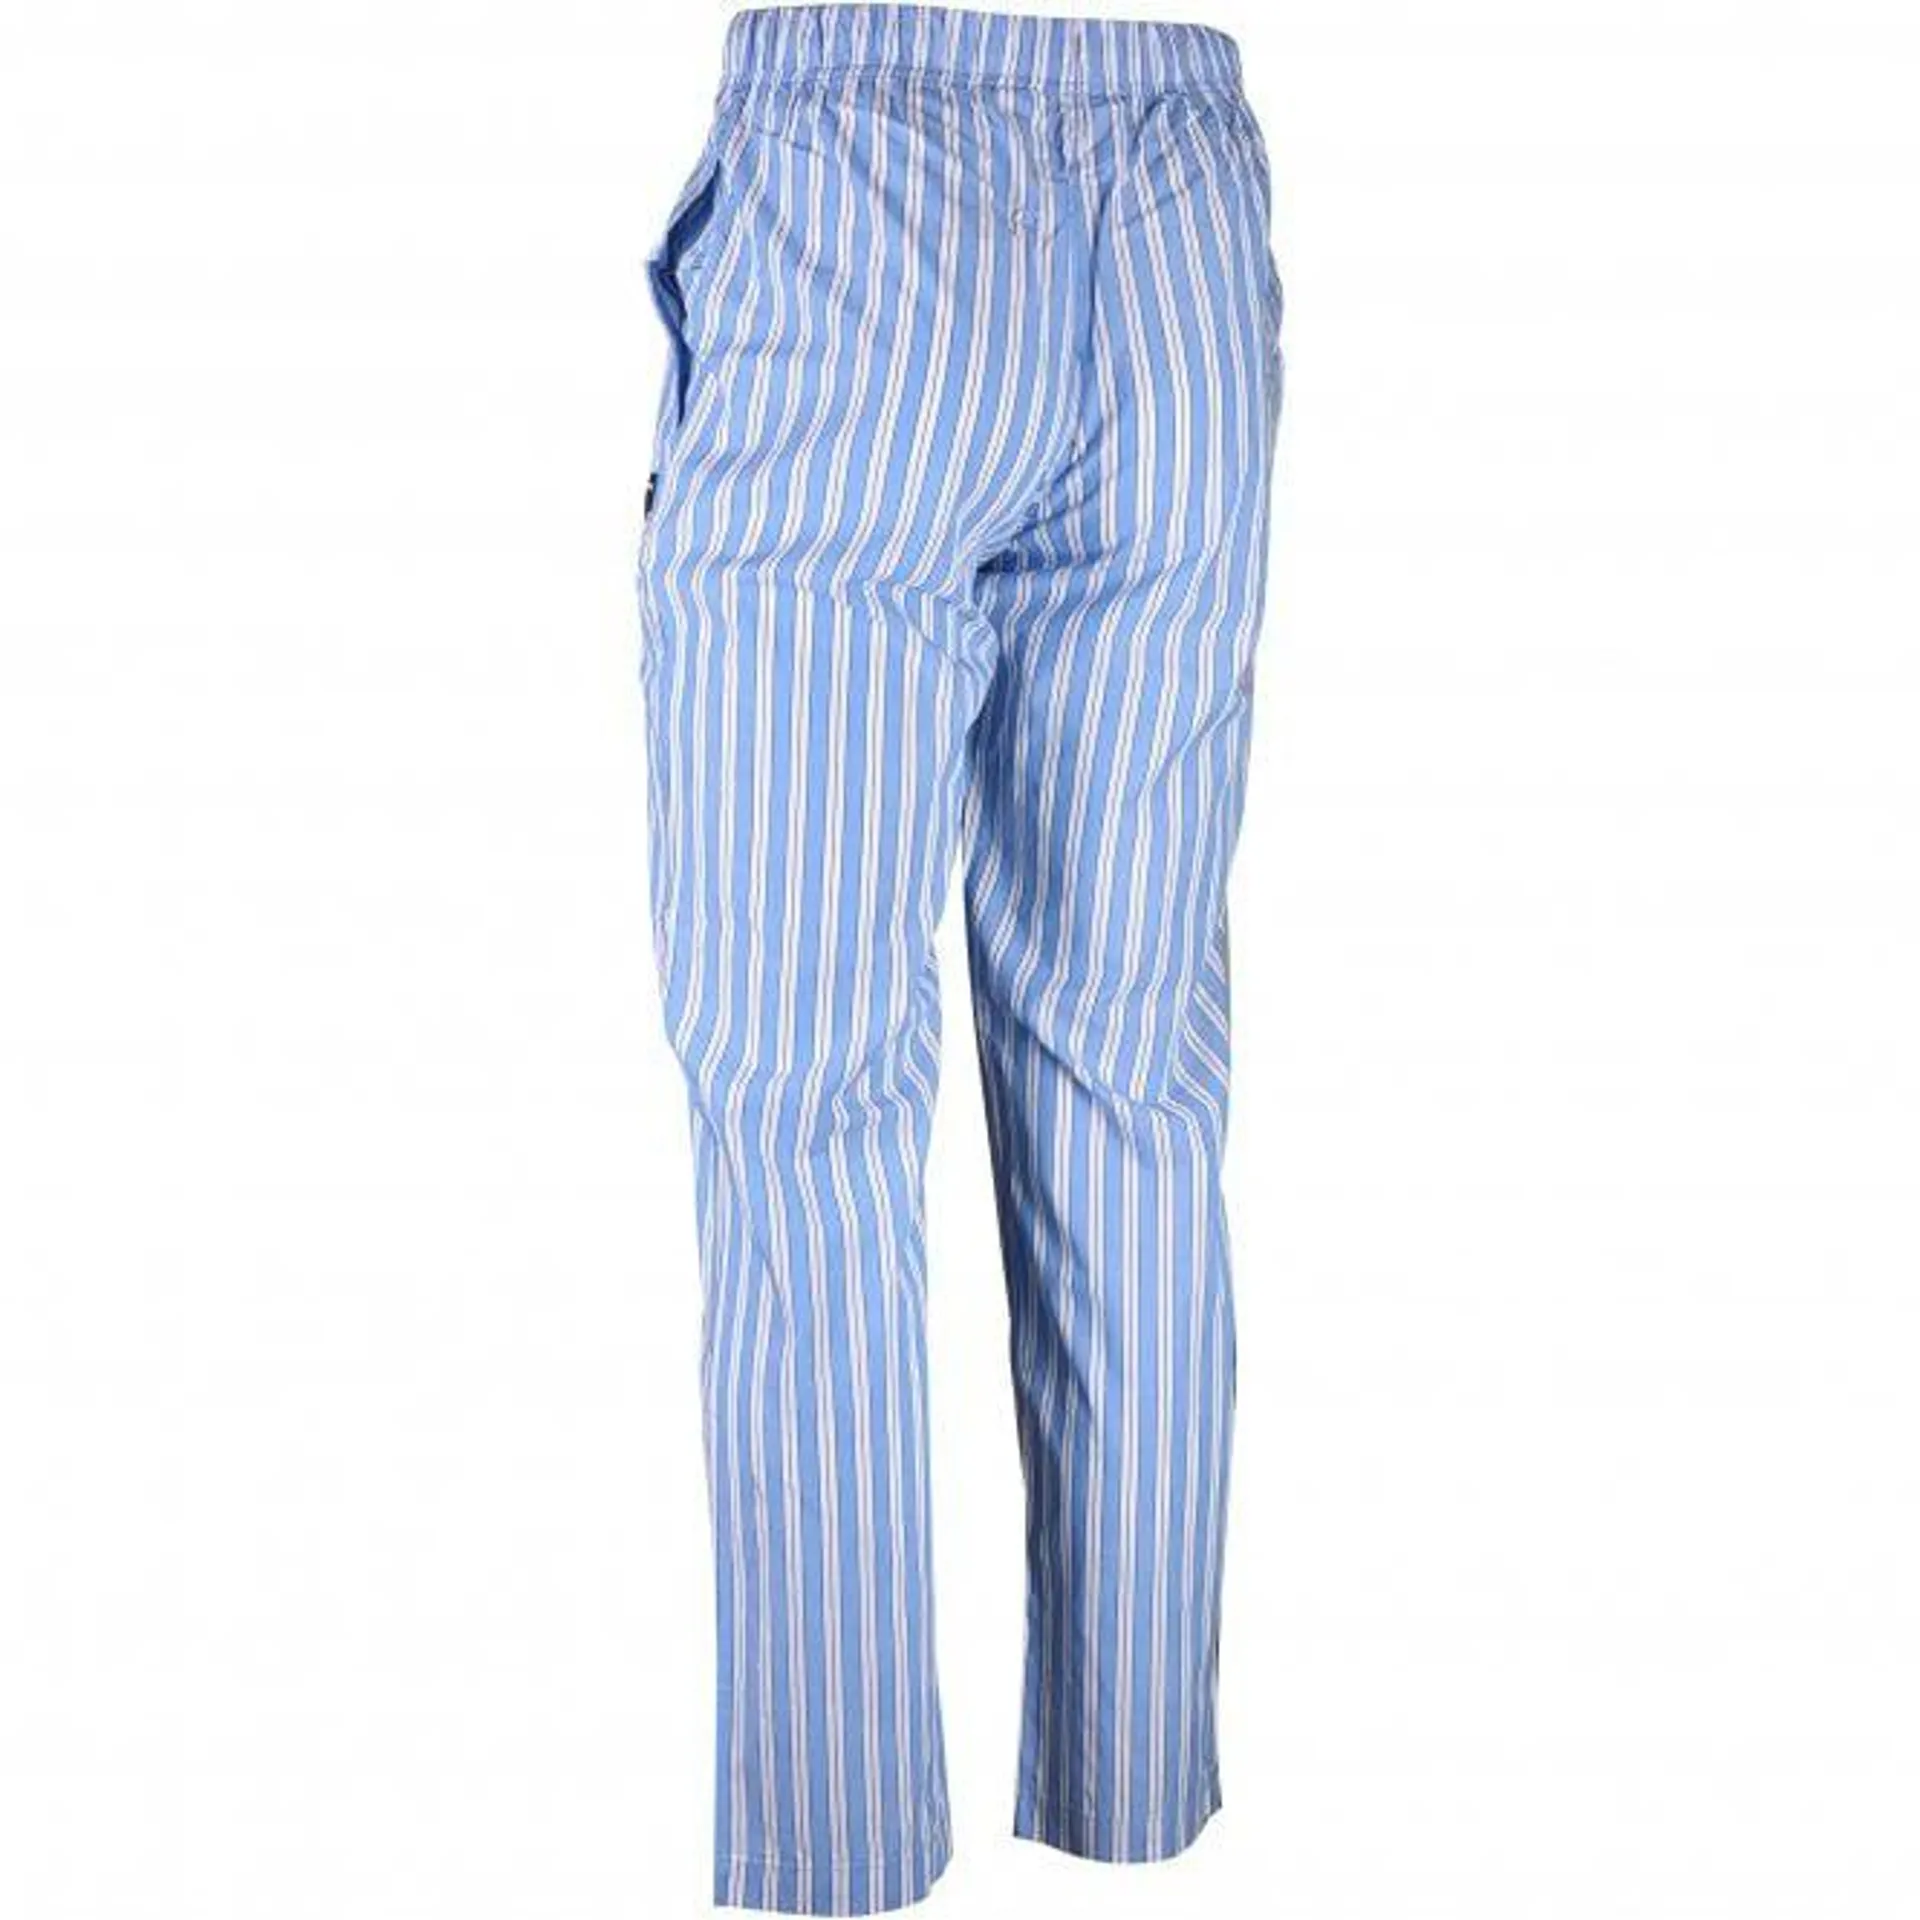 Bjorn Borg Woven Cotton Pyjama Bottoms, Blue Stripe